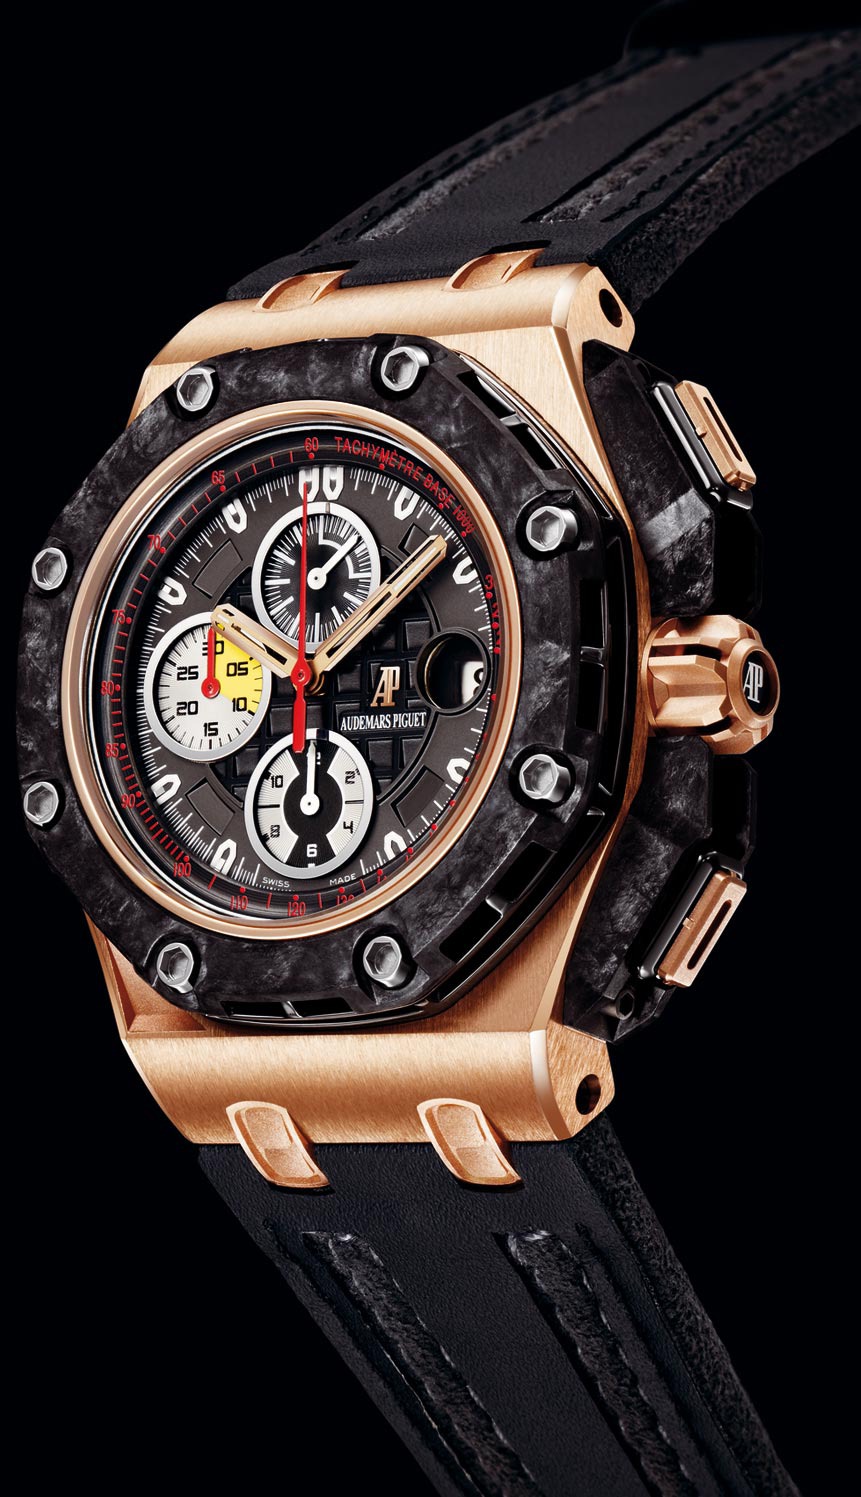 Audemars Piguet Royal Oak Offshore Grand Prix Pink Gold watch REF: 26290RO.OO.A001VE.01 - Click Image to Close